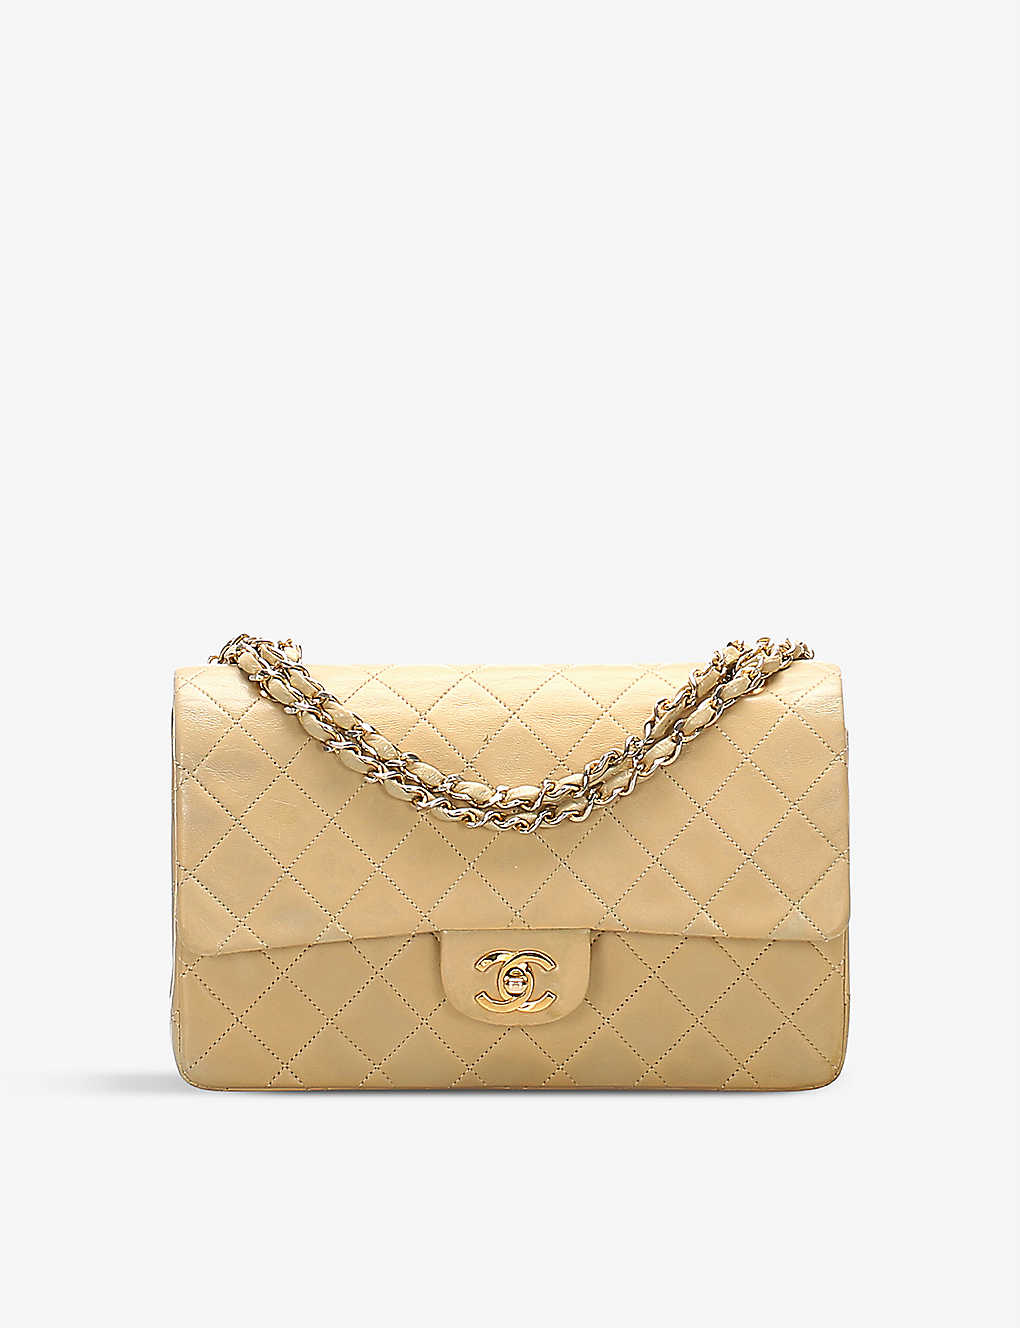 RESELLFRIDGES Pre-loved Chanel Classic medium leather shoulder bag | Selfridges.com